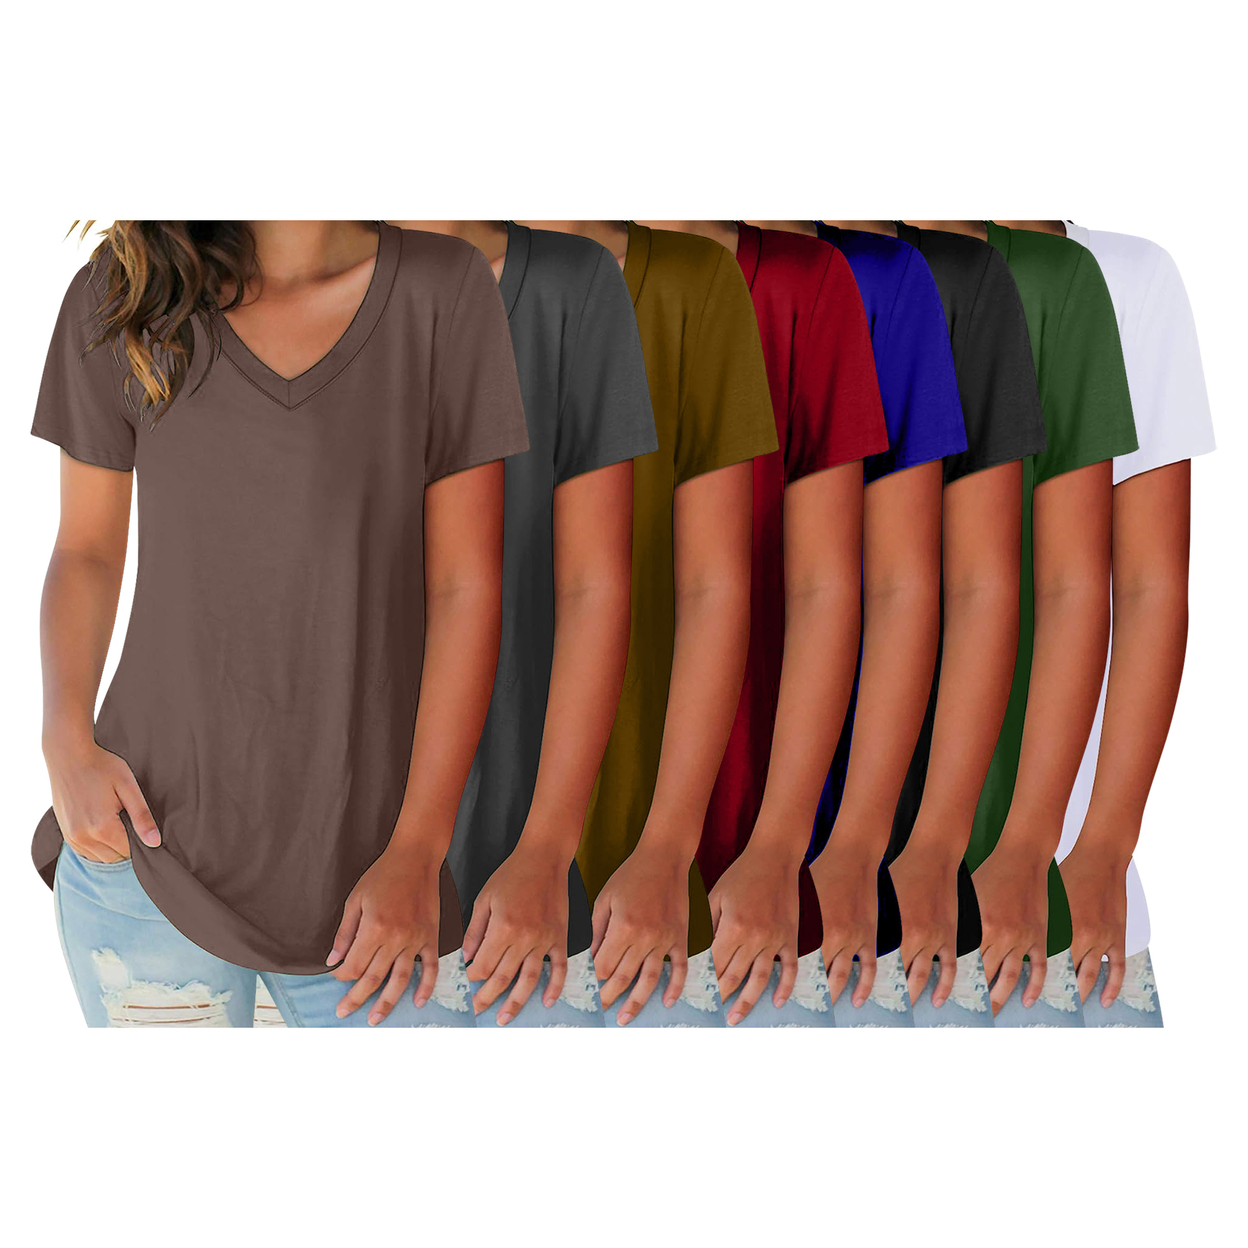 2-Pack: Women's Ultra Soft Smooth Cotton Blend Basic V-Neck Short Sleeve Shirts - Black & Green, X-large